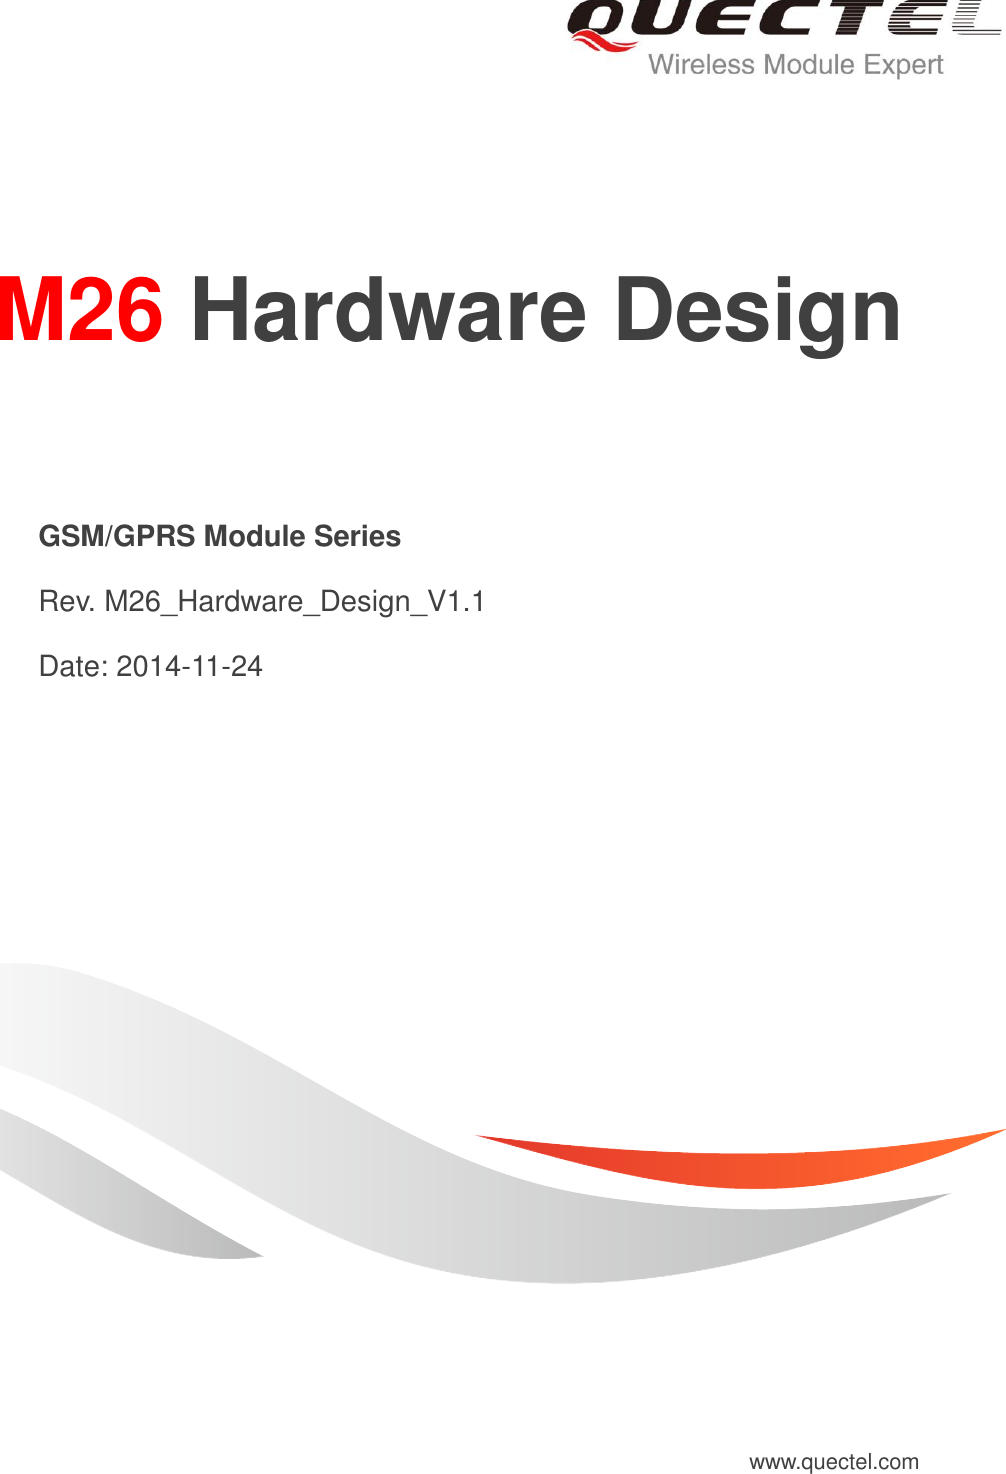 M26 Hardware Design GSM/GPRS Module Series Rev. M26_Hardware_Design_V1.1 Date: 2014-11-24 www.quectel.com